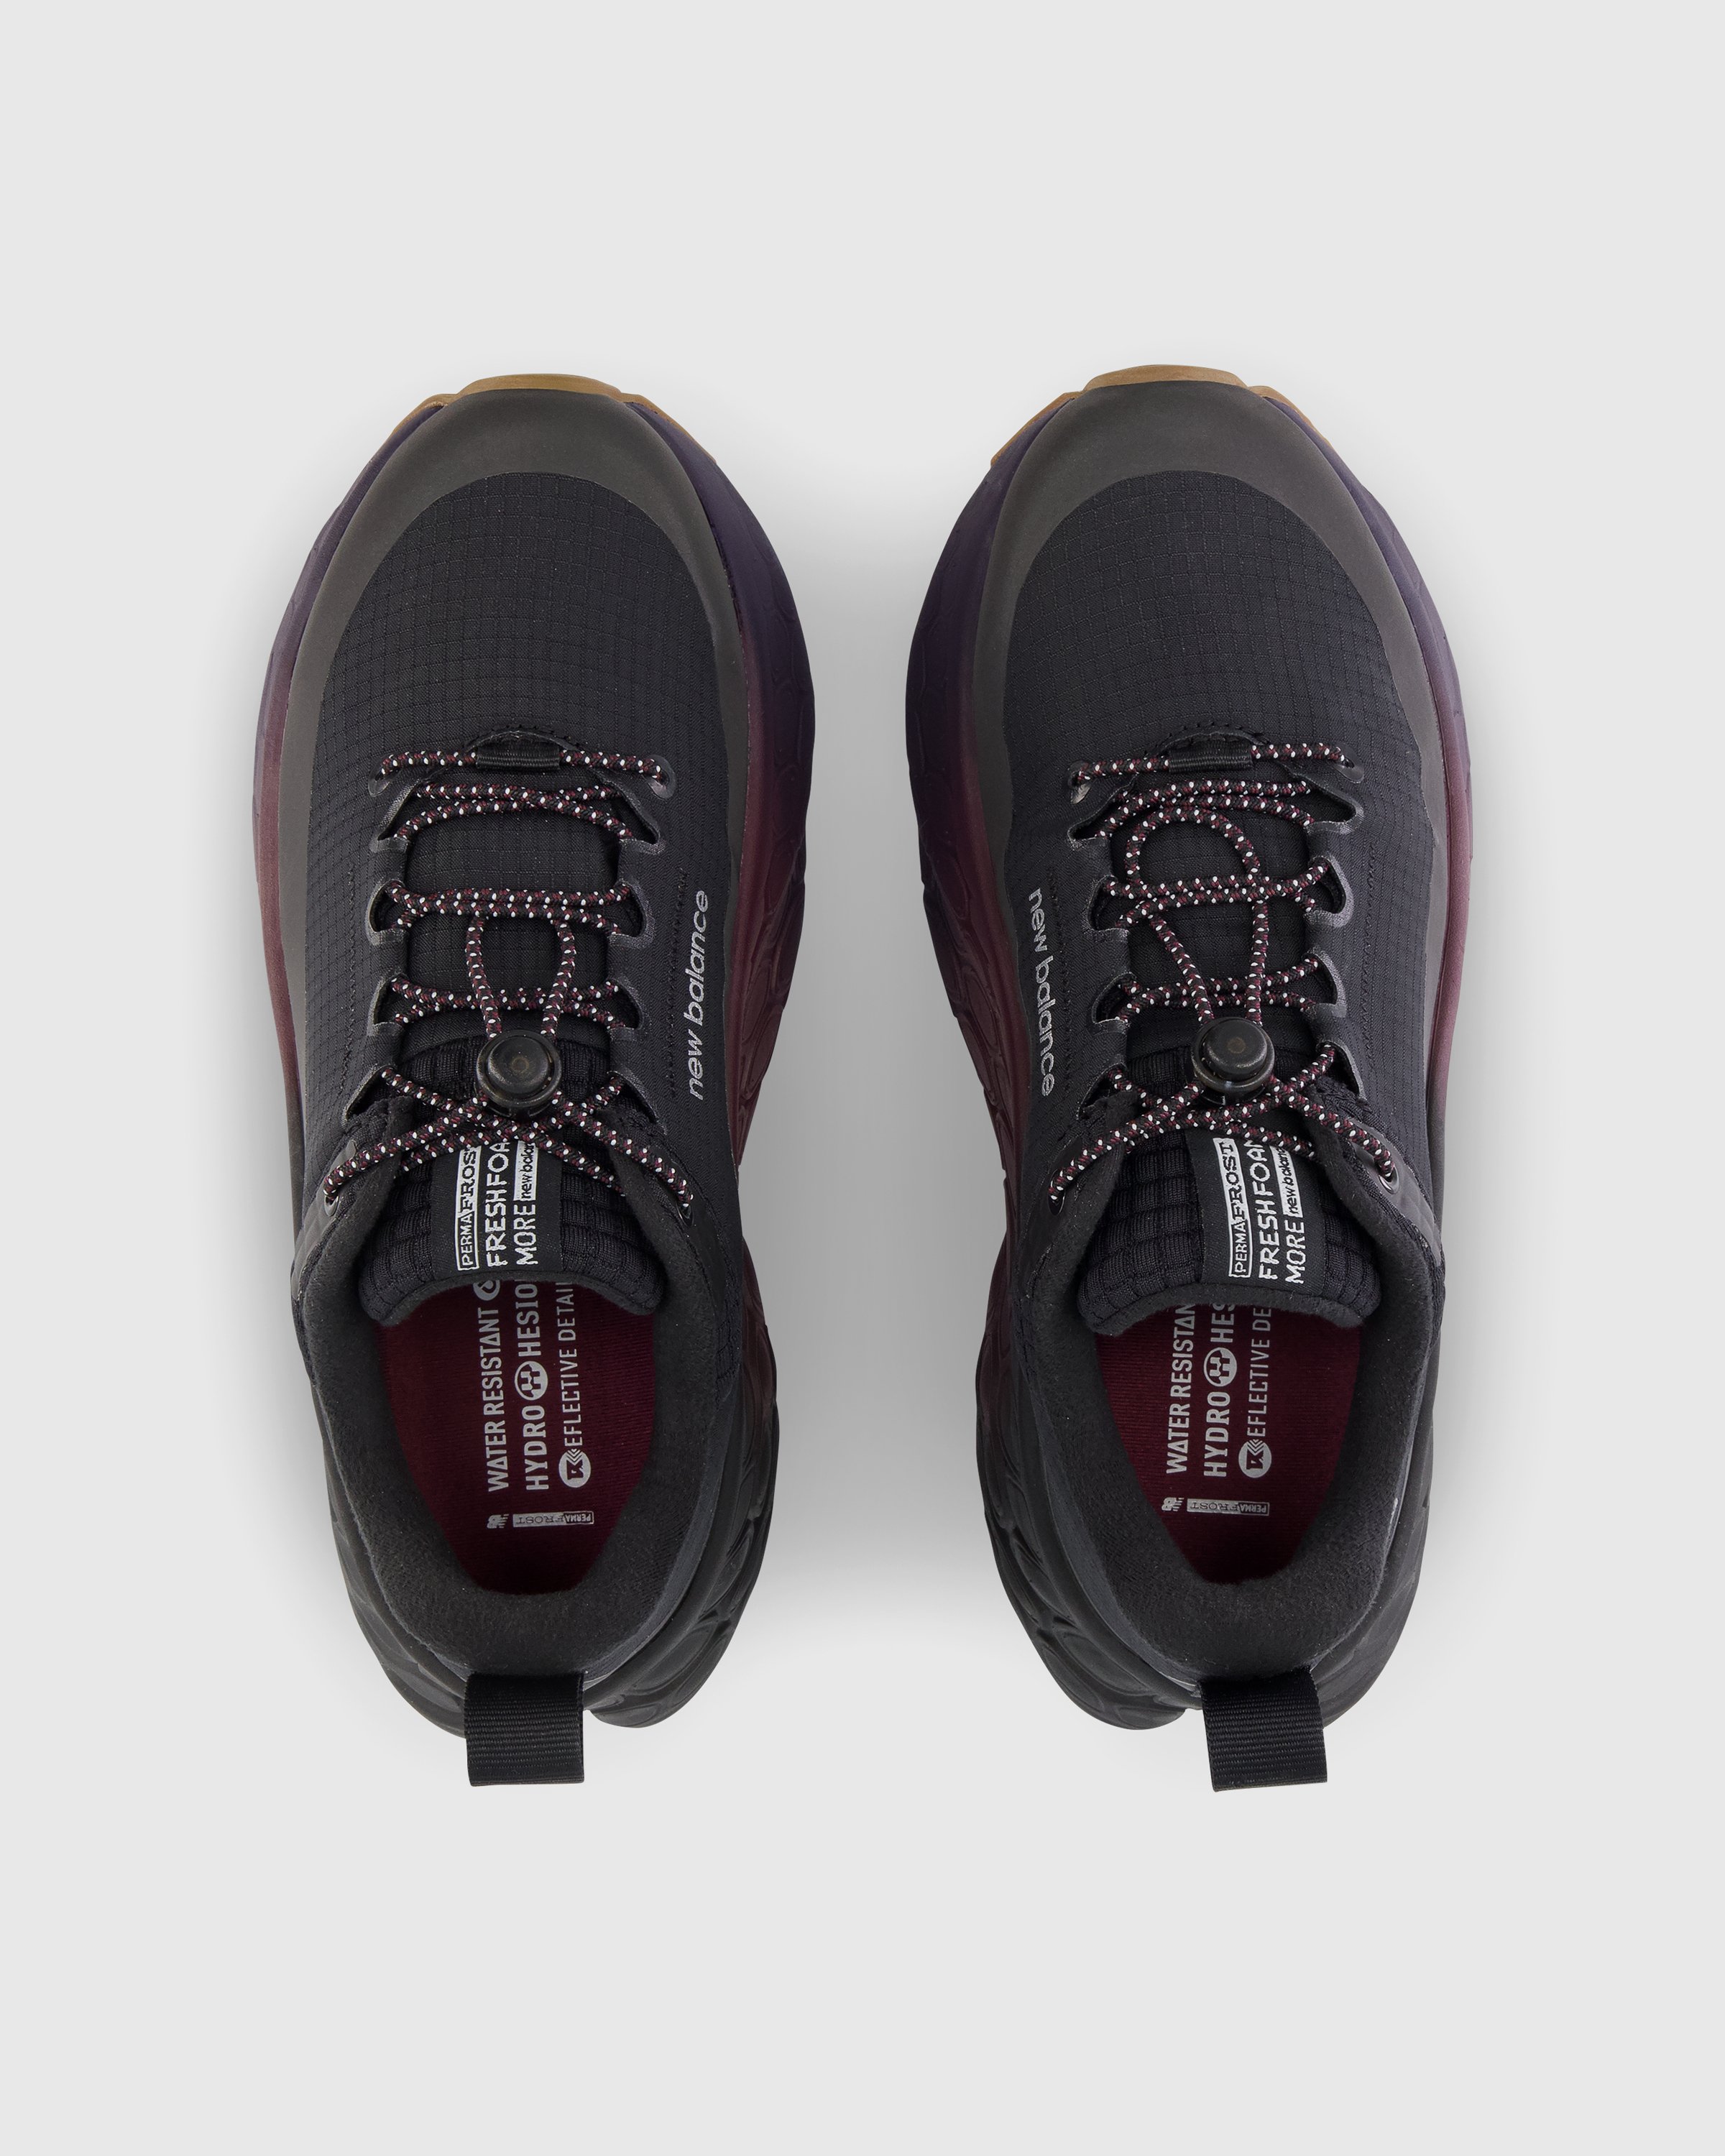 New Balance - WMORWBK Black - Footwear - Black - Image 6